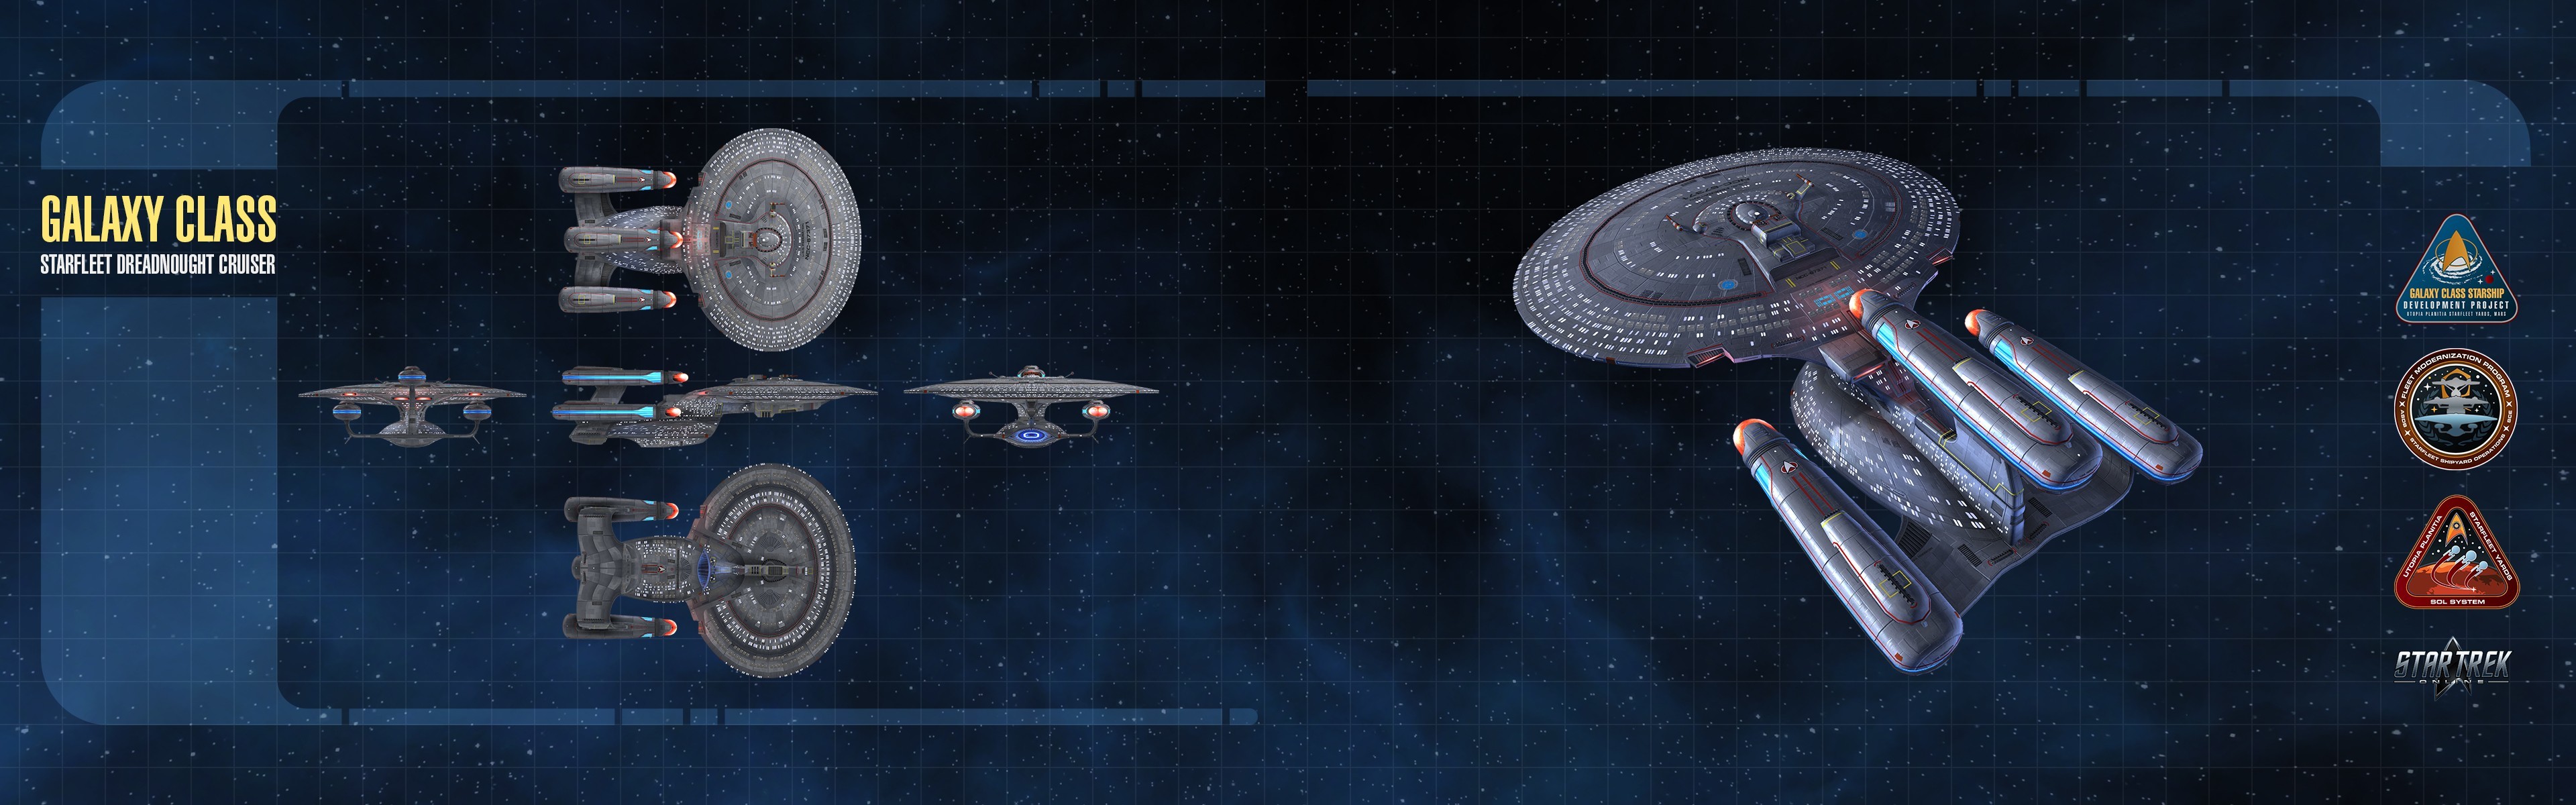 General Star Trek spaceship multiple display dual monitors